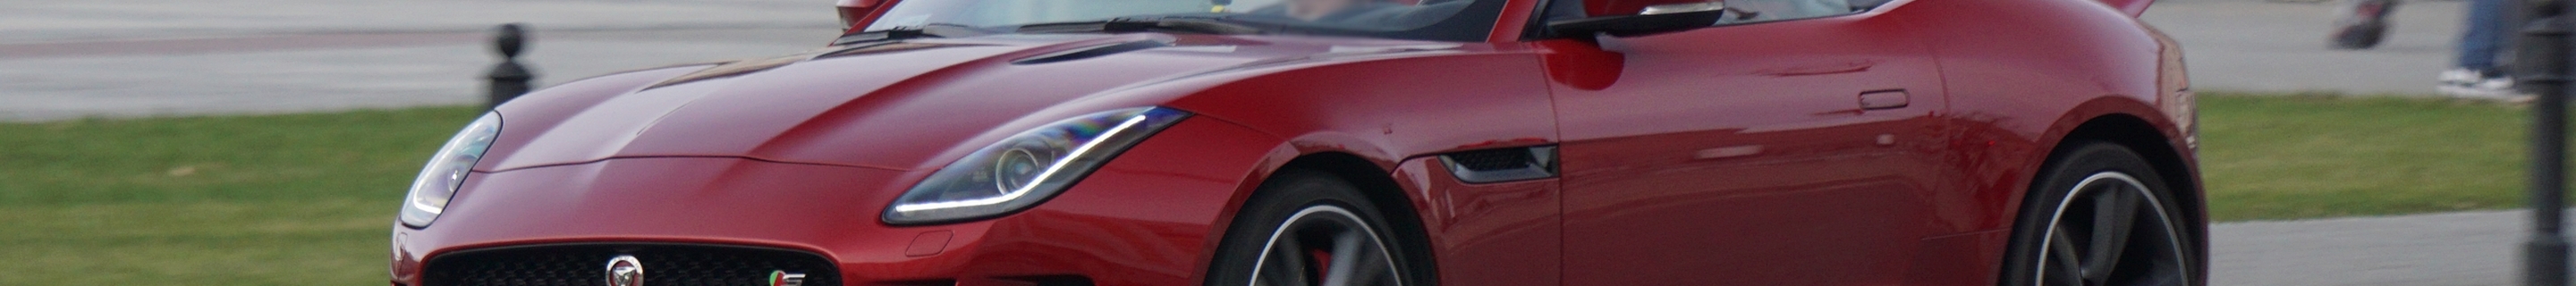 Jaguar F-TYPE S V8 Convertible